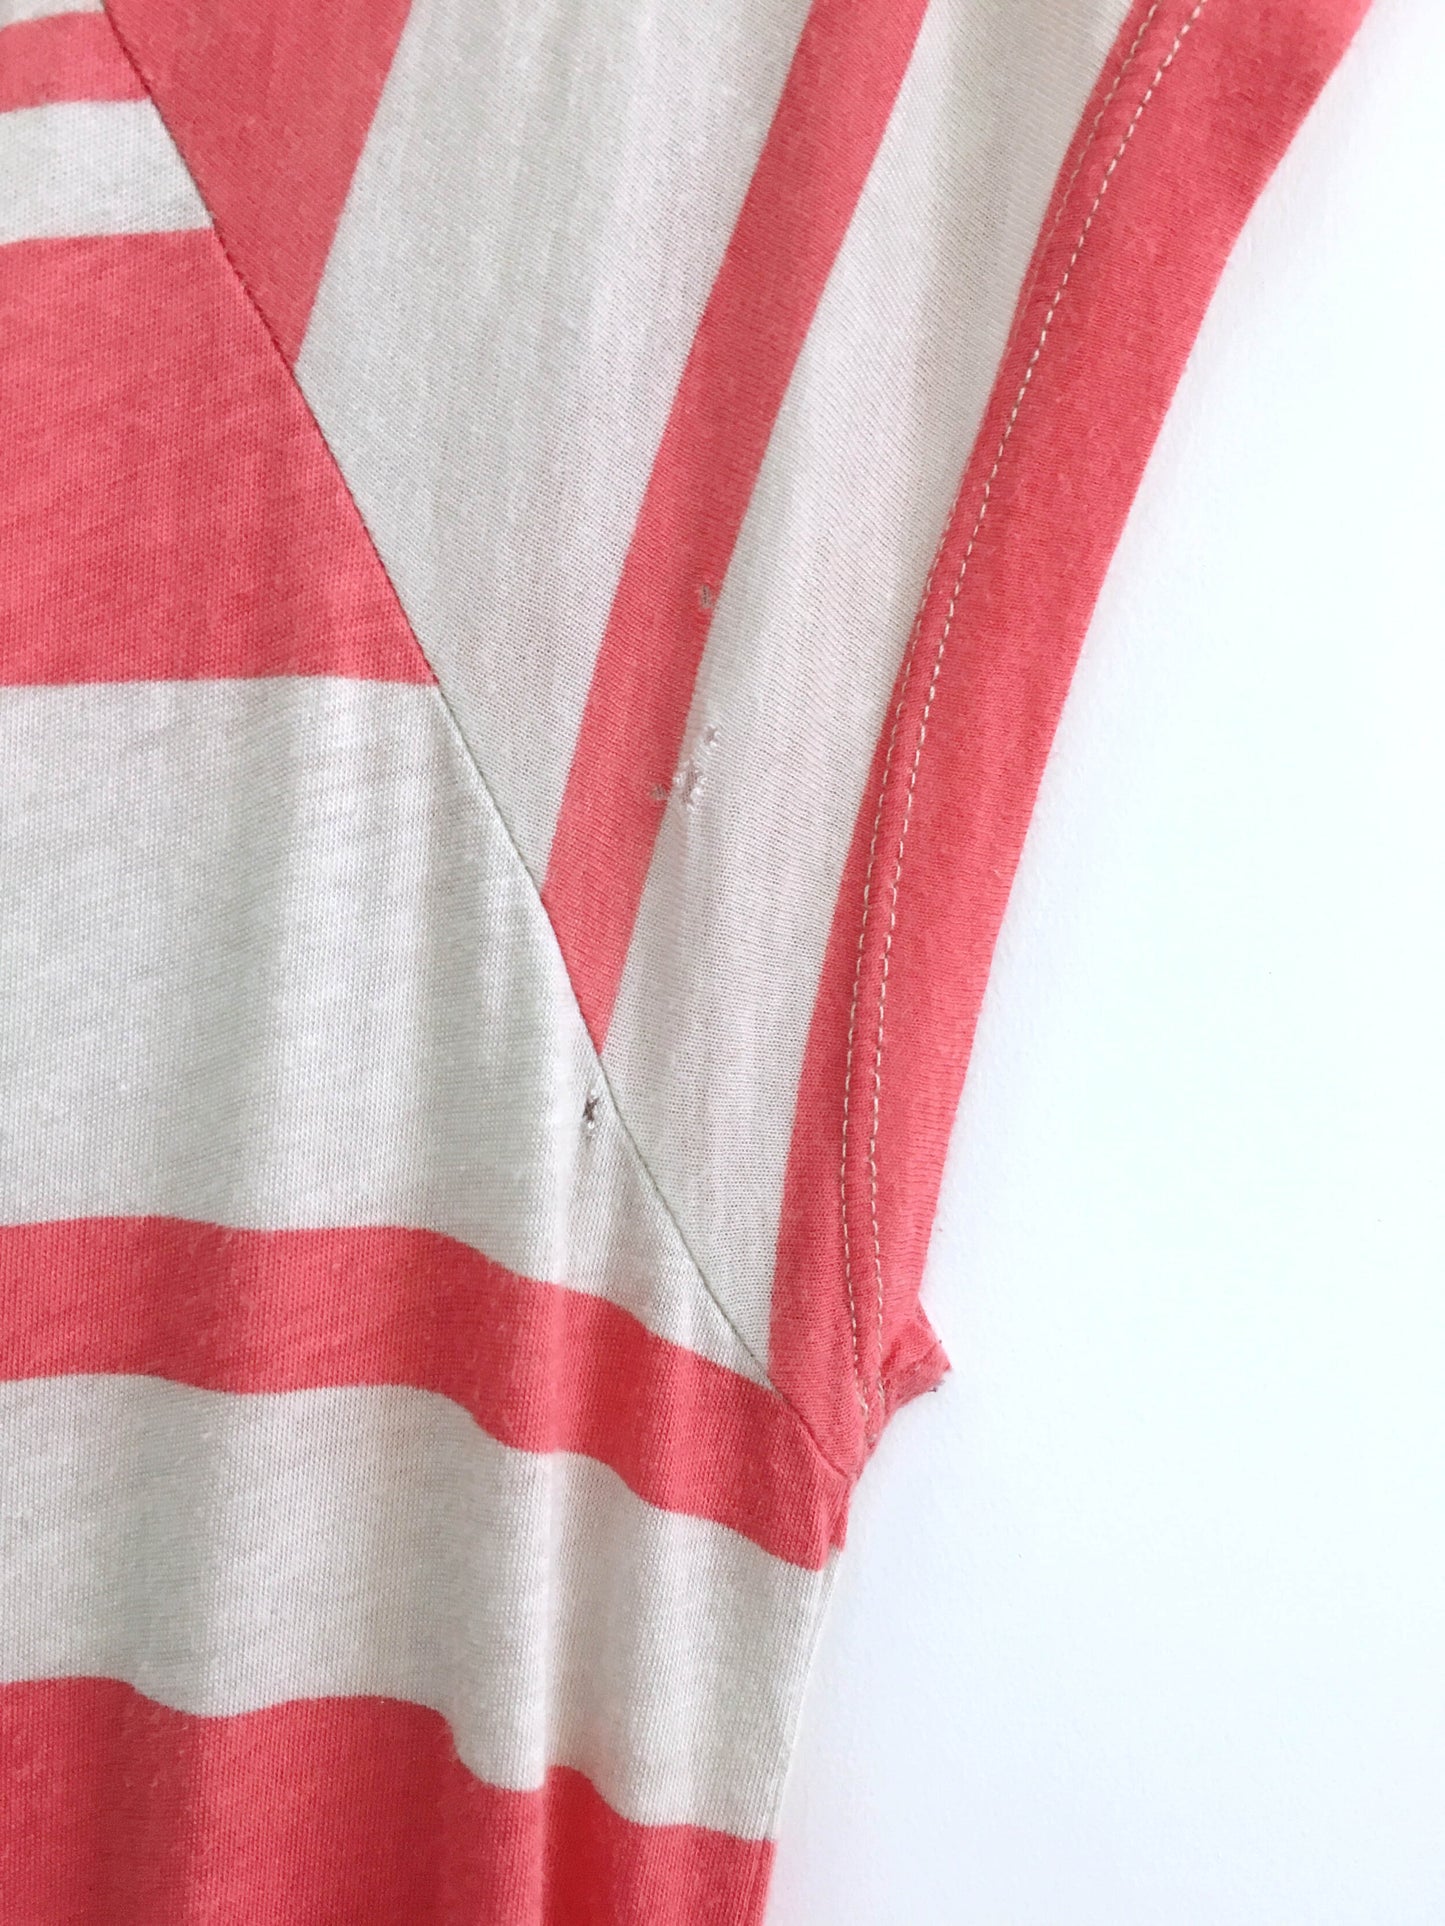 Splendid Maritime Red Stripe Maxi Dress  - size Small